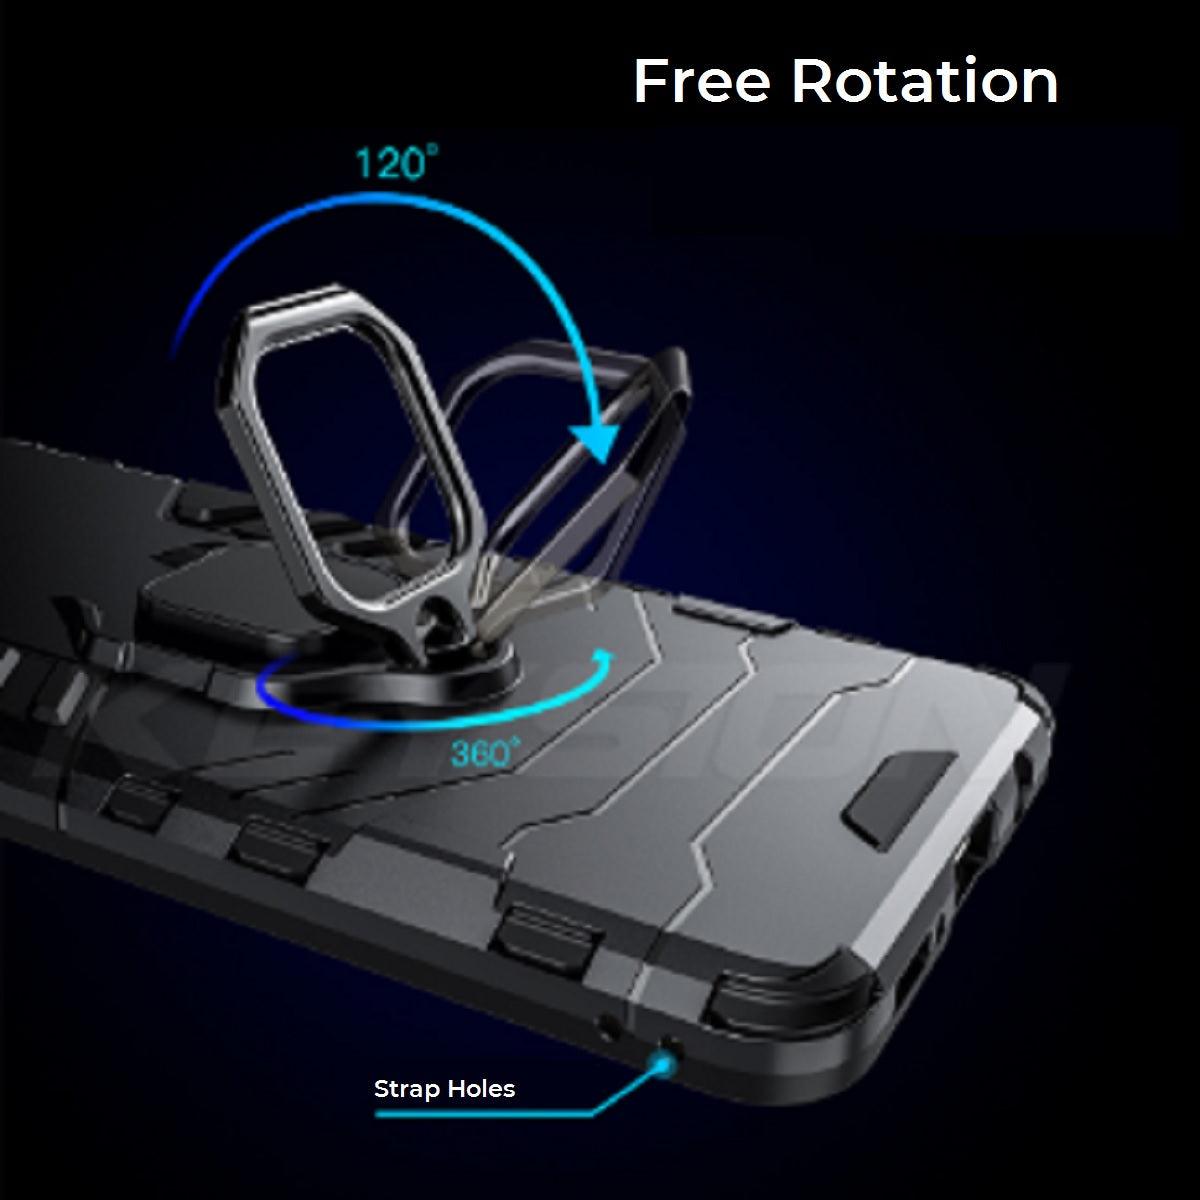 Armoured Protection Hard Shell Back Cover - For Samsung Mobiles - dealskart.com.au